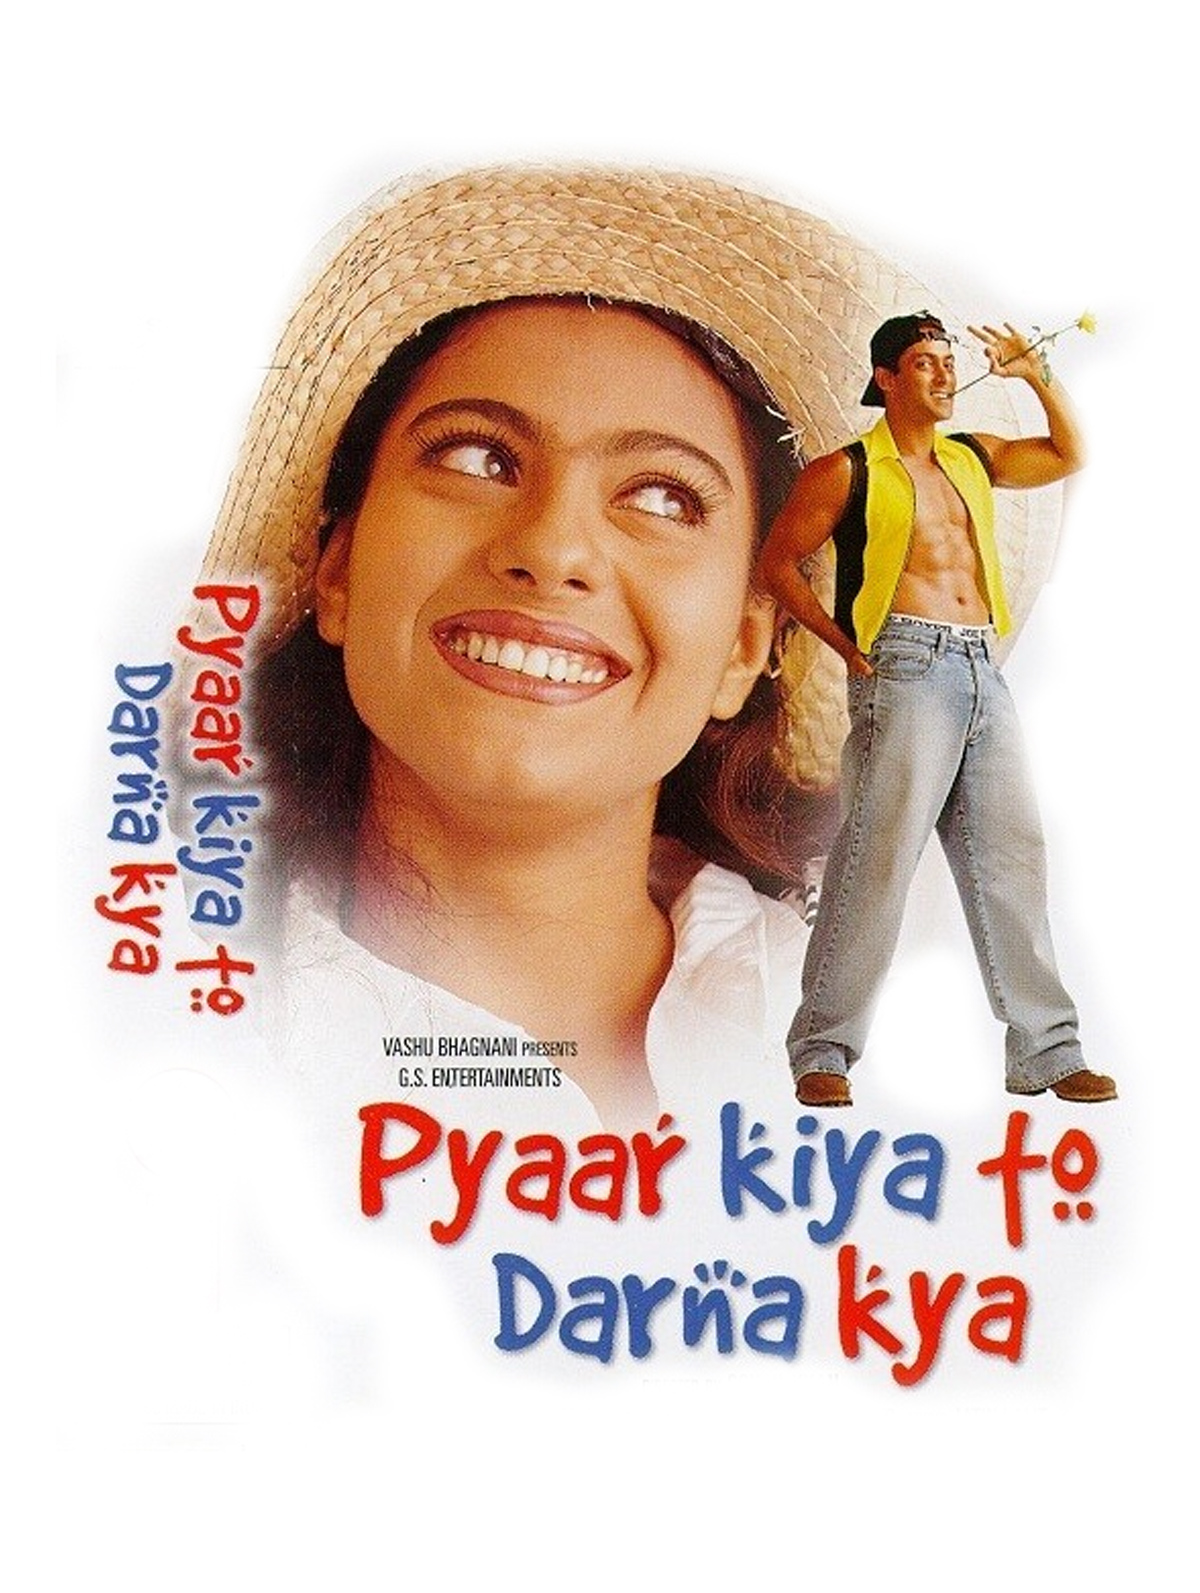 Pyaar Kiya to Darna Kya - Where to Watch and Stream - TV Guide